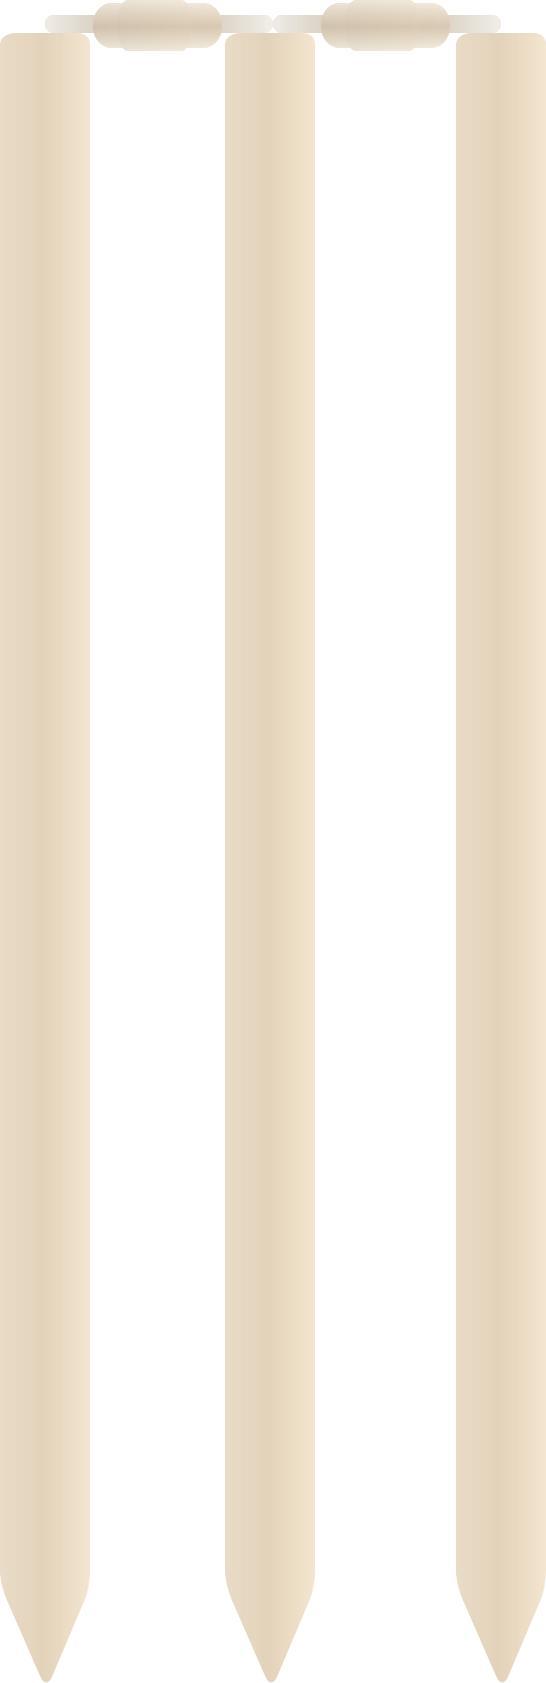 Cricket Stumps and Rails png transparent